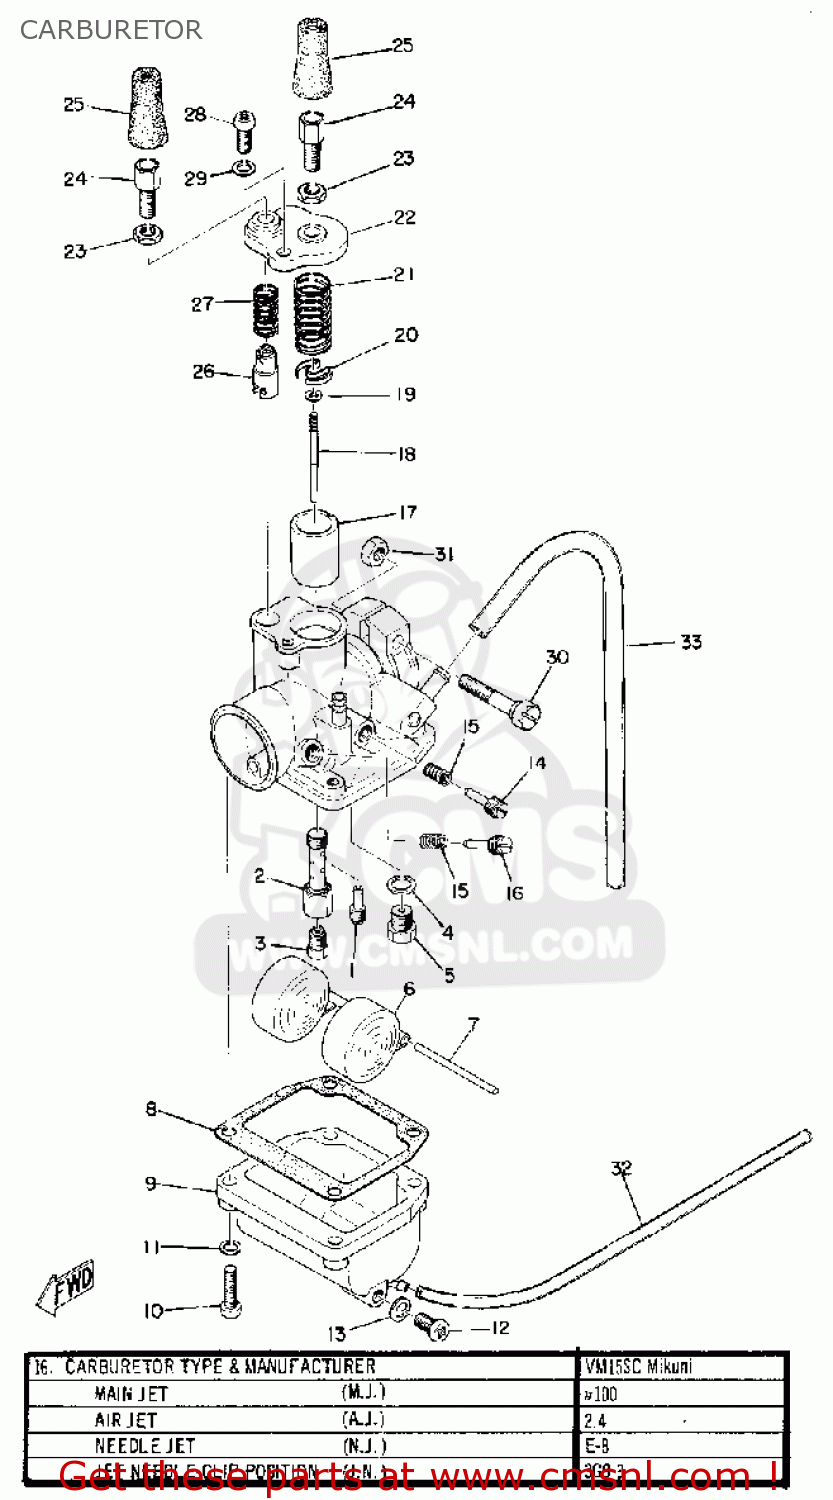 yamaha pw80 carburetor diagram